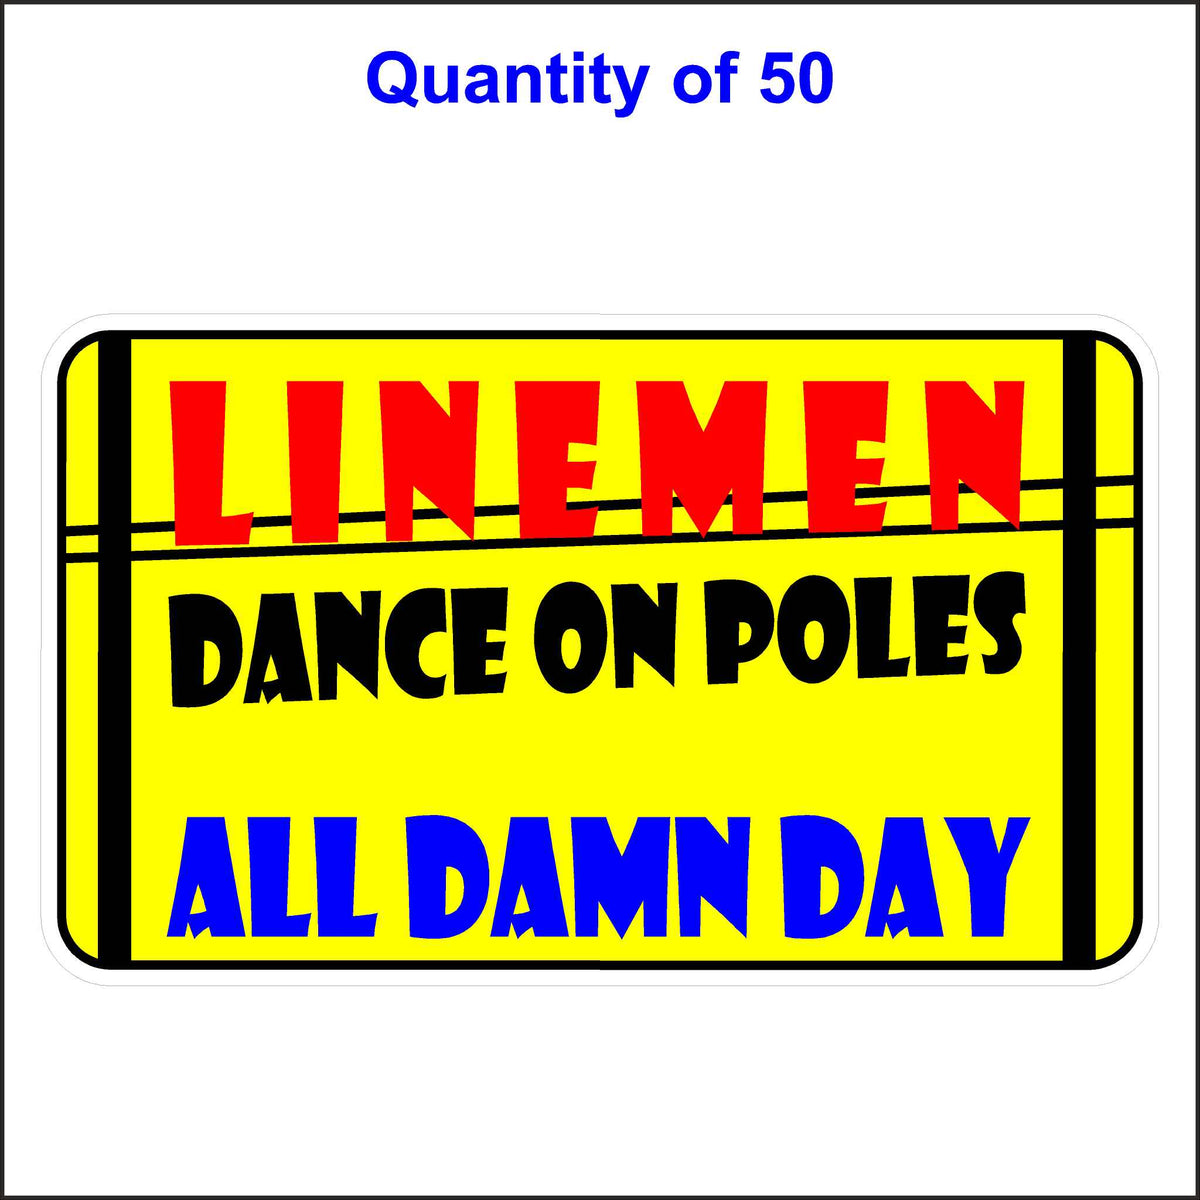 Lineman Dance on Poles All Damn Day Sticker. 50 Quantity.